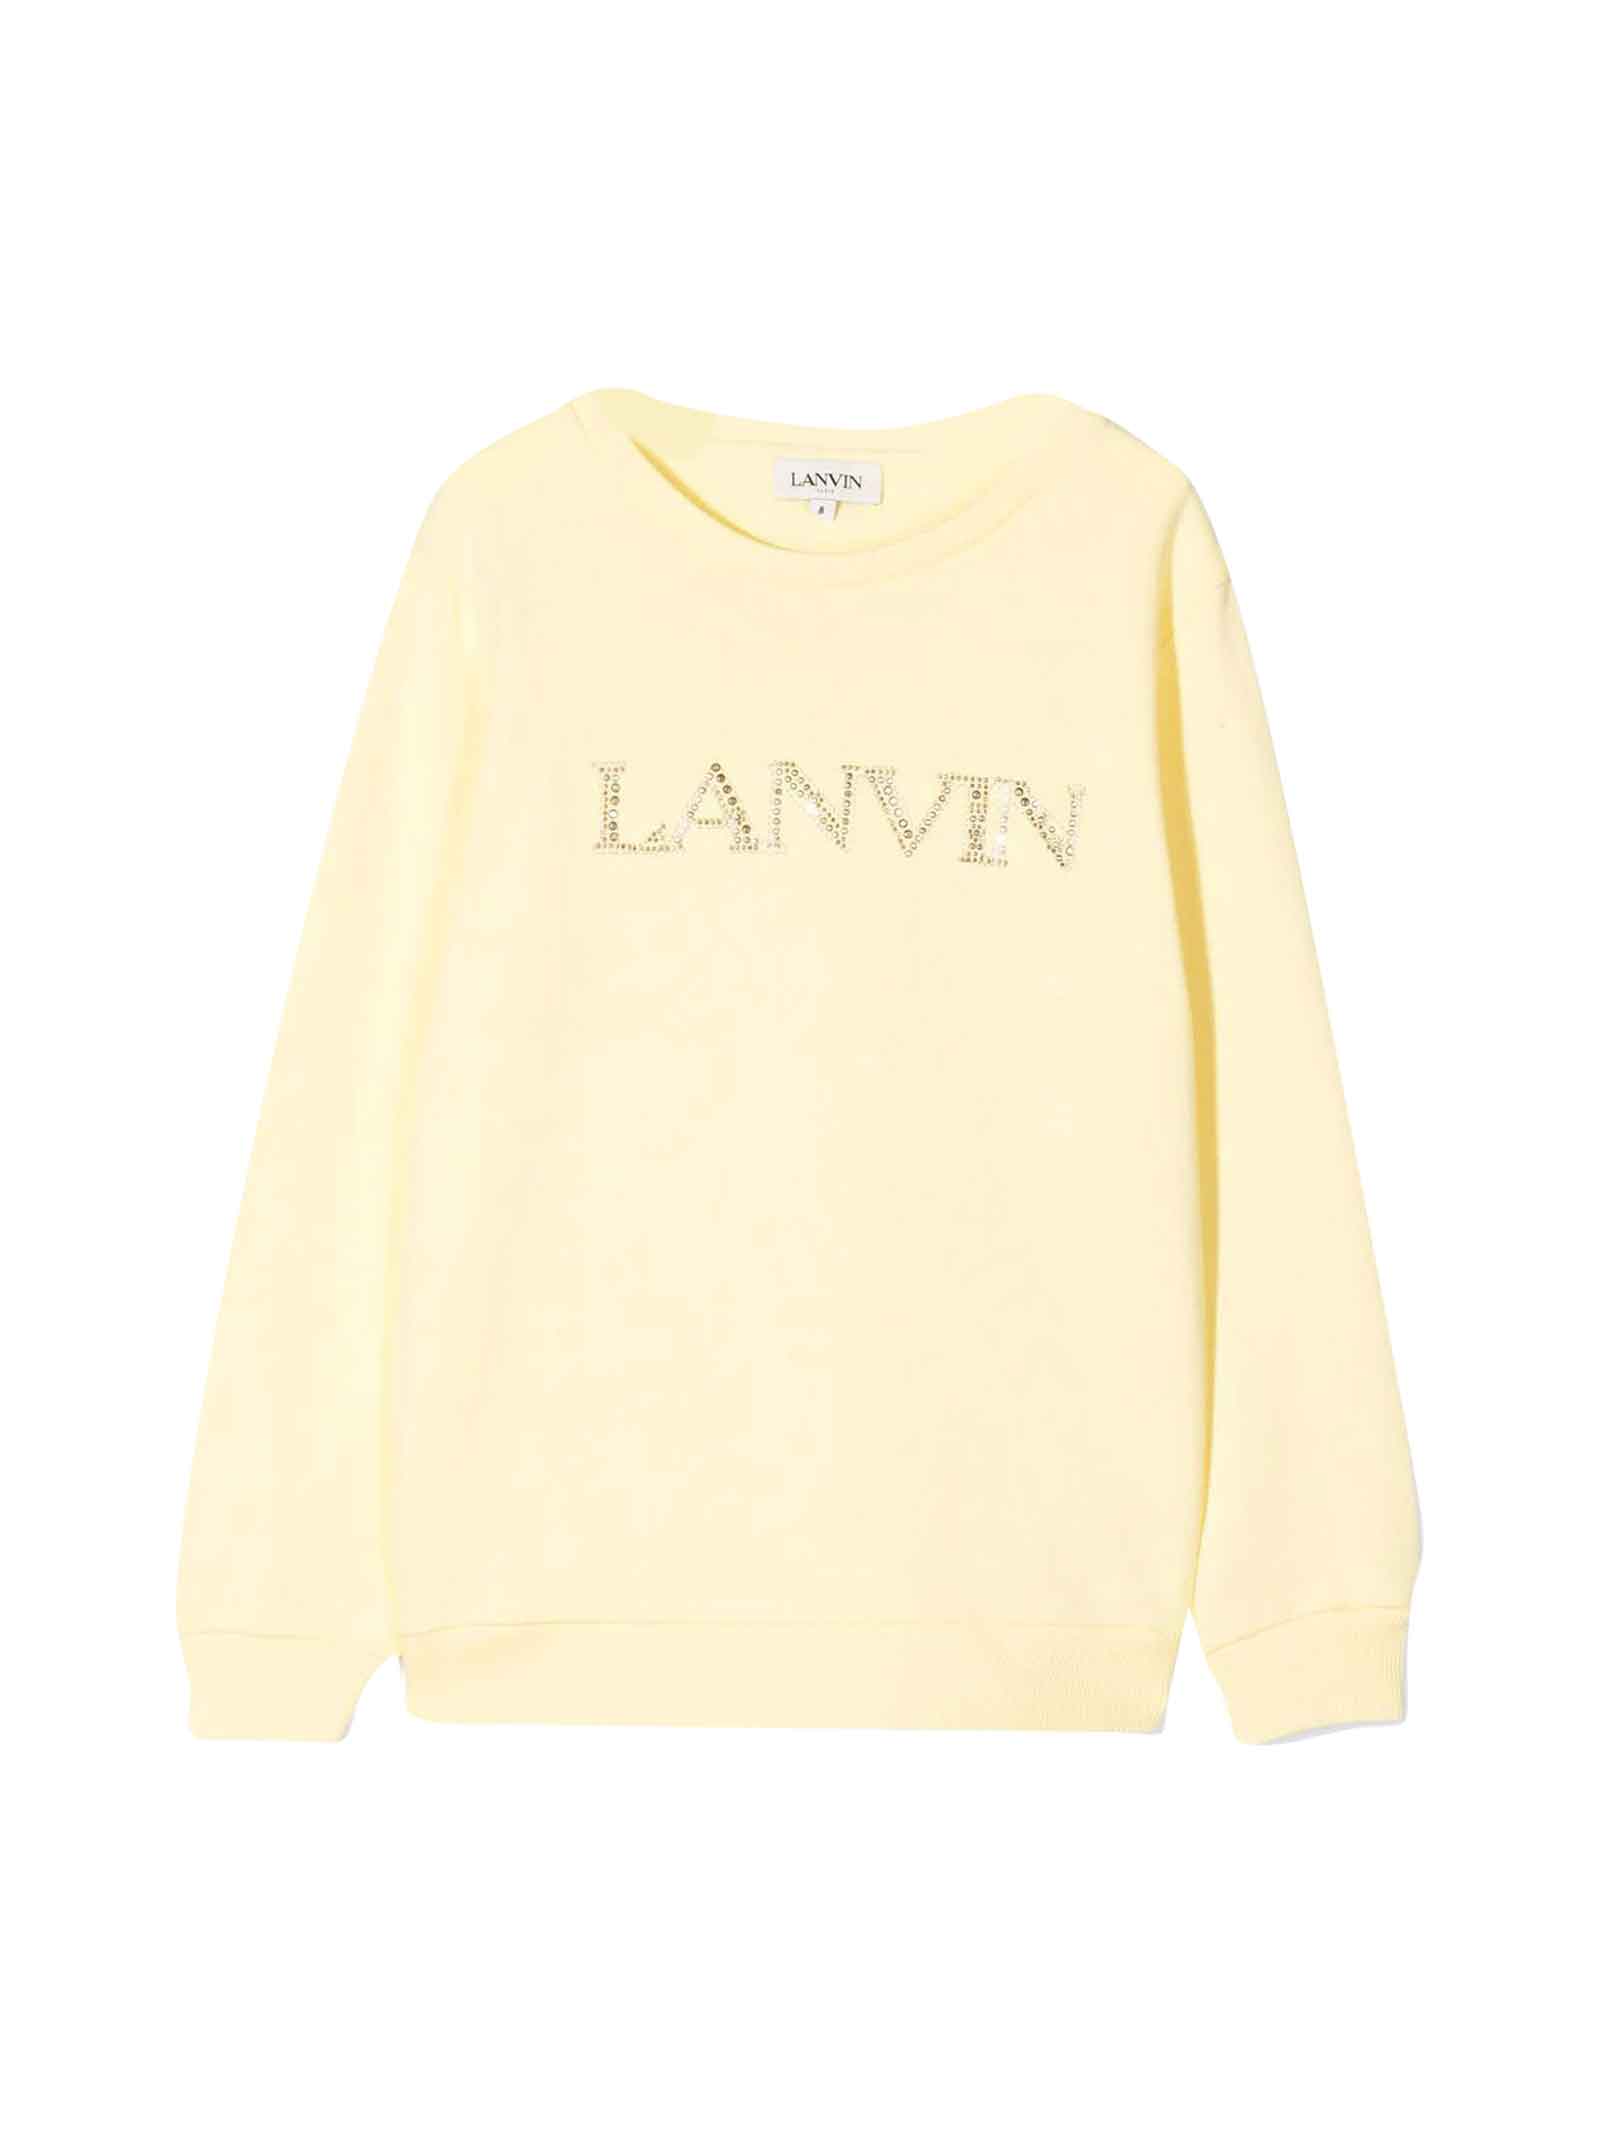 Lanvin Yellow Unisex Sweatshirt